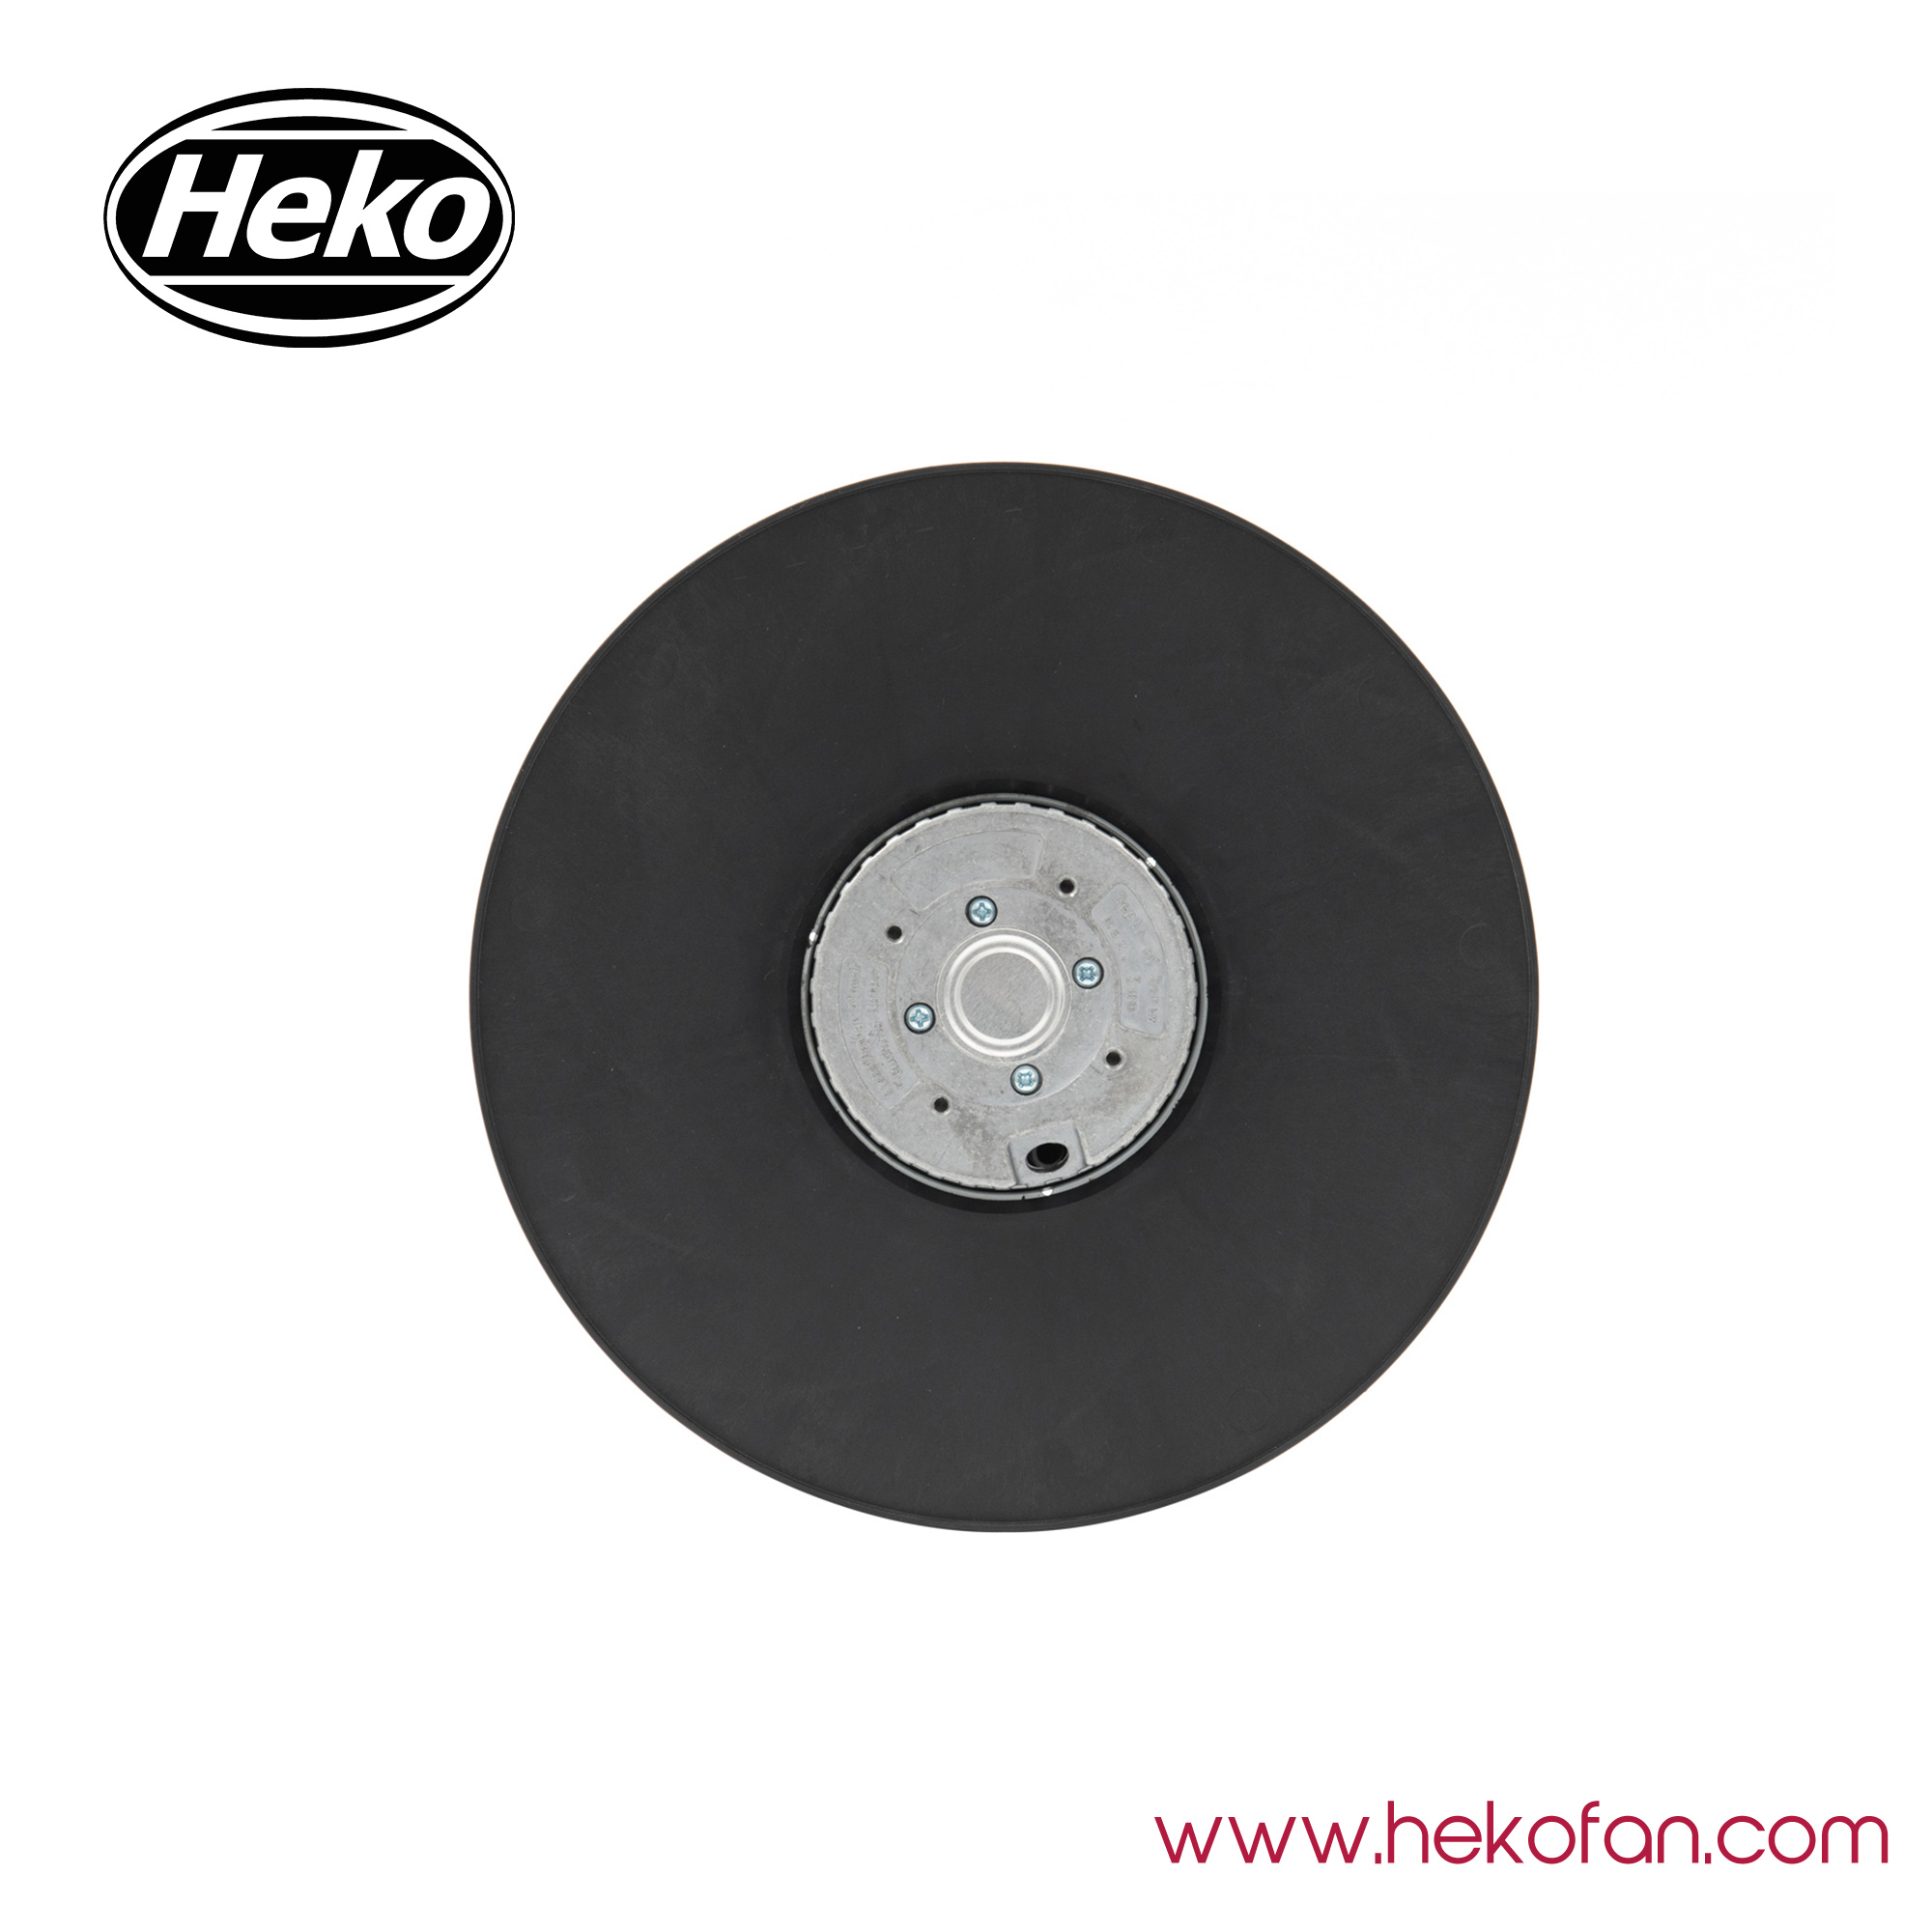 HEKO DC225mm Industrial Backward Centrifugal Extractor Fans 